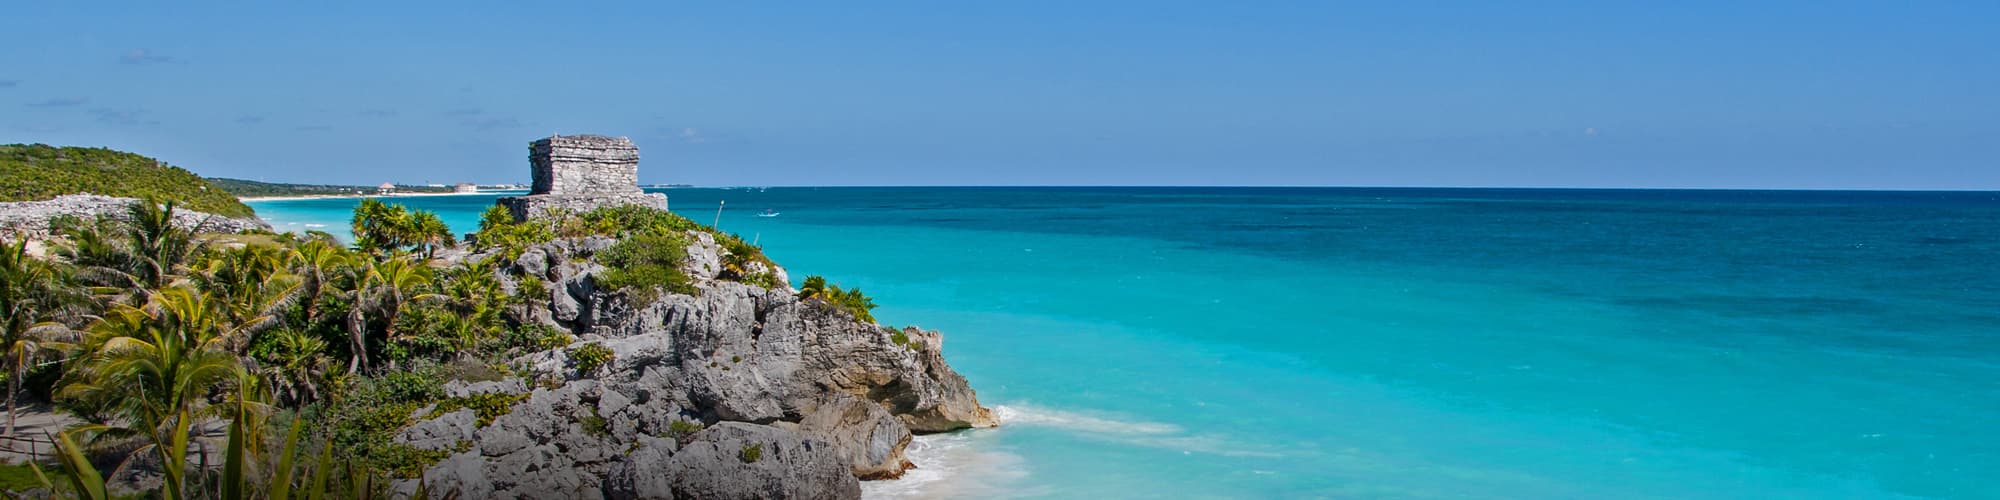 Trek au Yucatán et caraïbes : randonnée,circuit et voyage  © markross / Istock